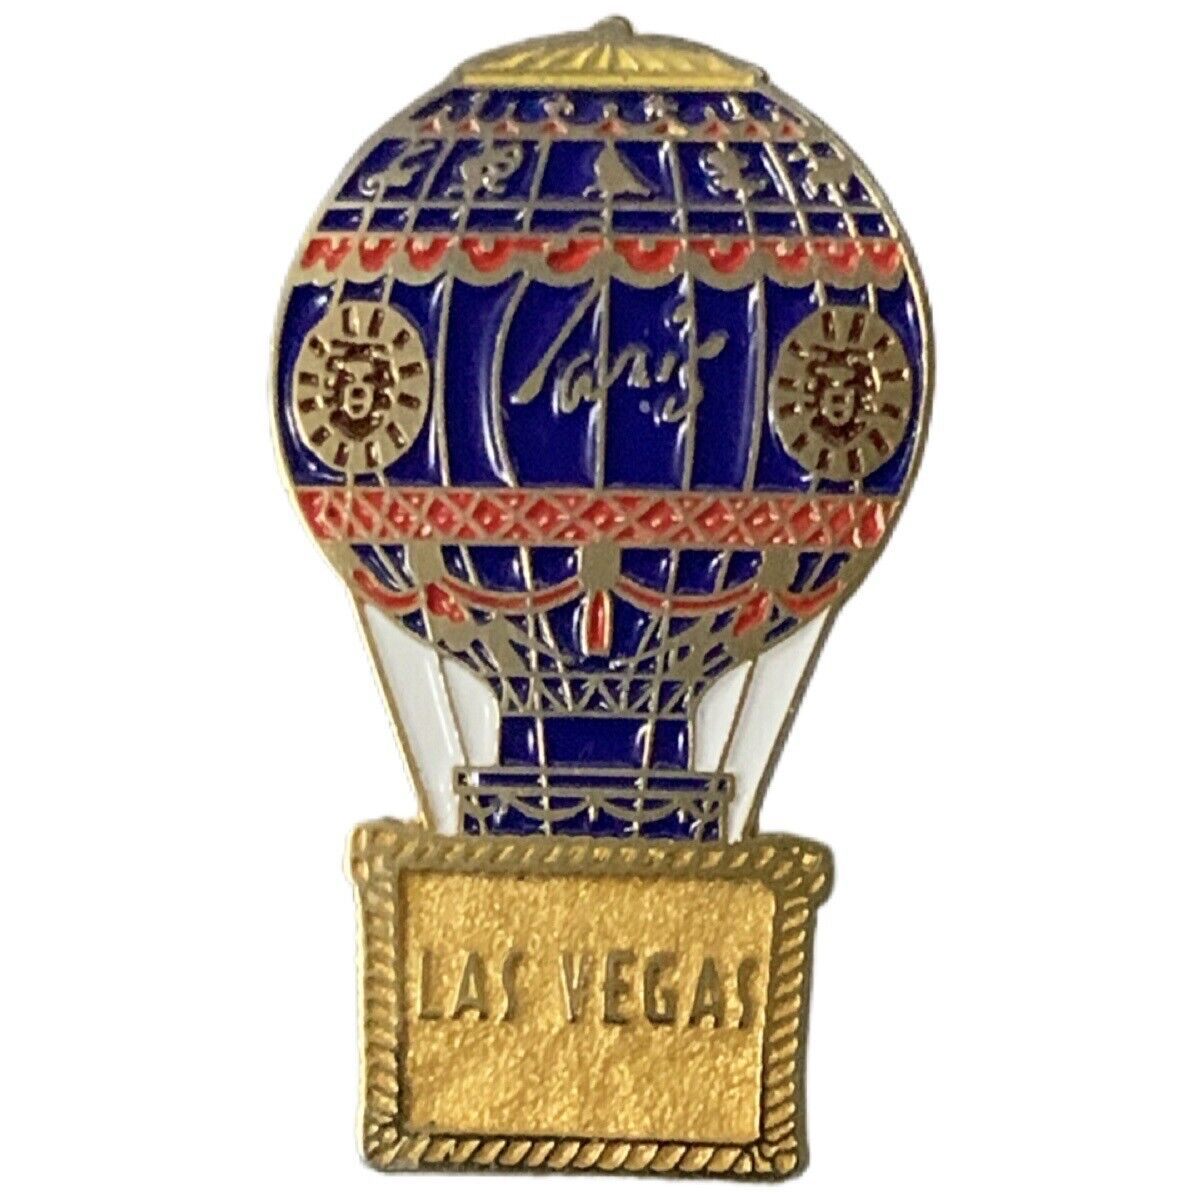 Vintage Paris Las Vegas Hotel & Casino Hot Air Balloon Travel Souvenir Pin